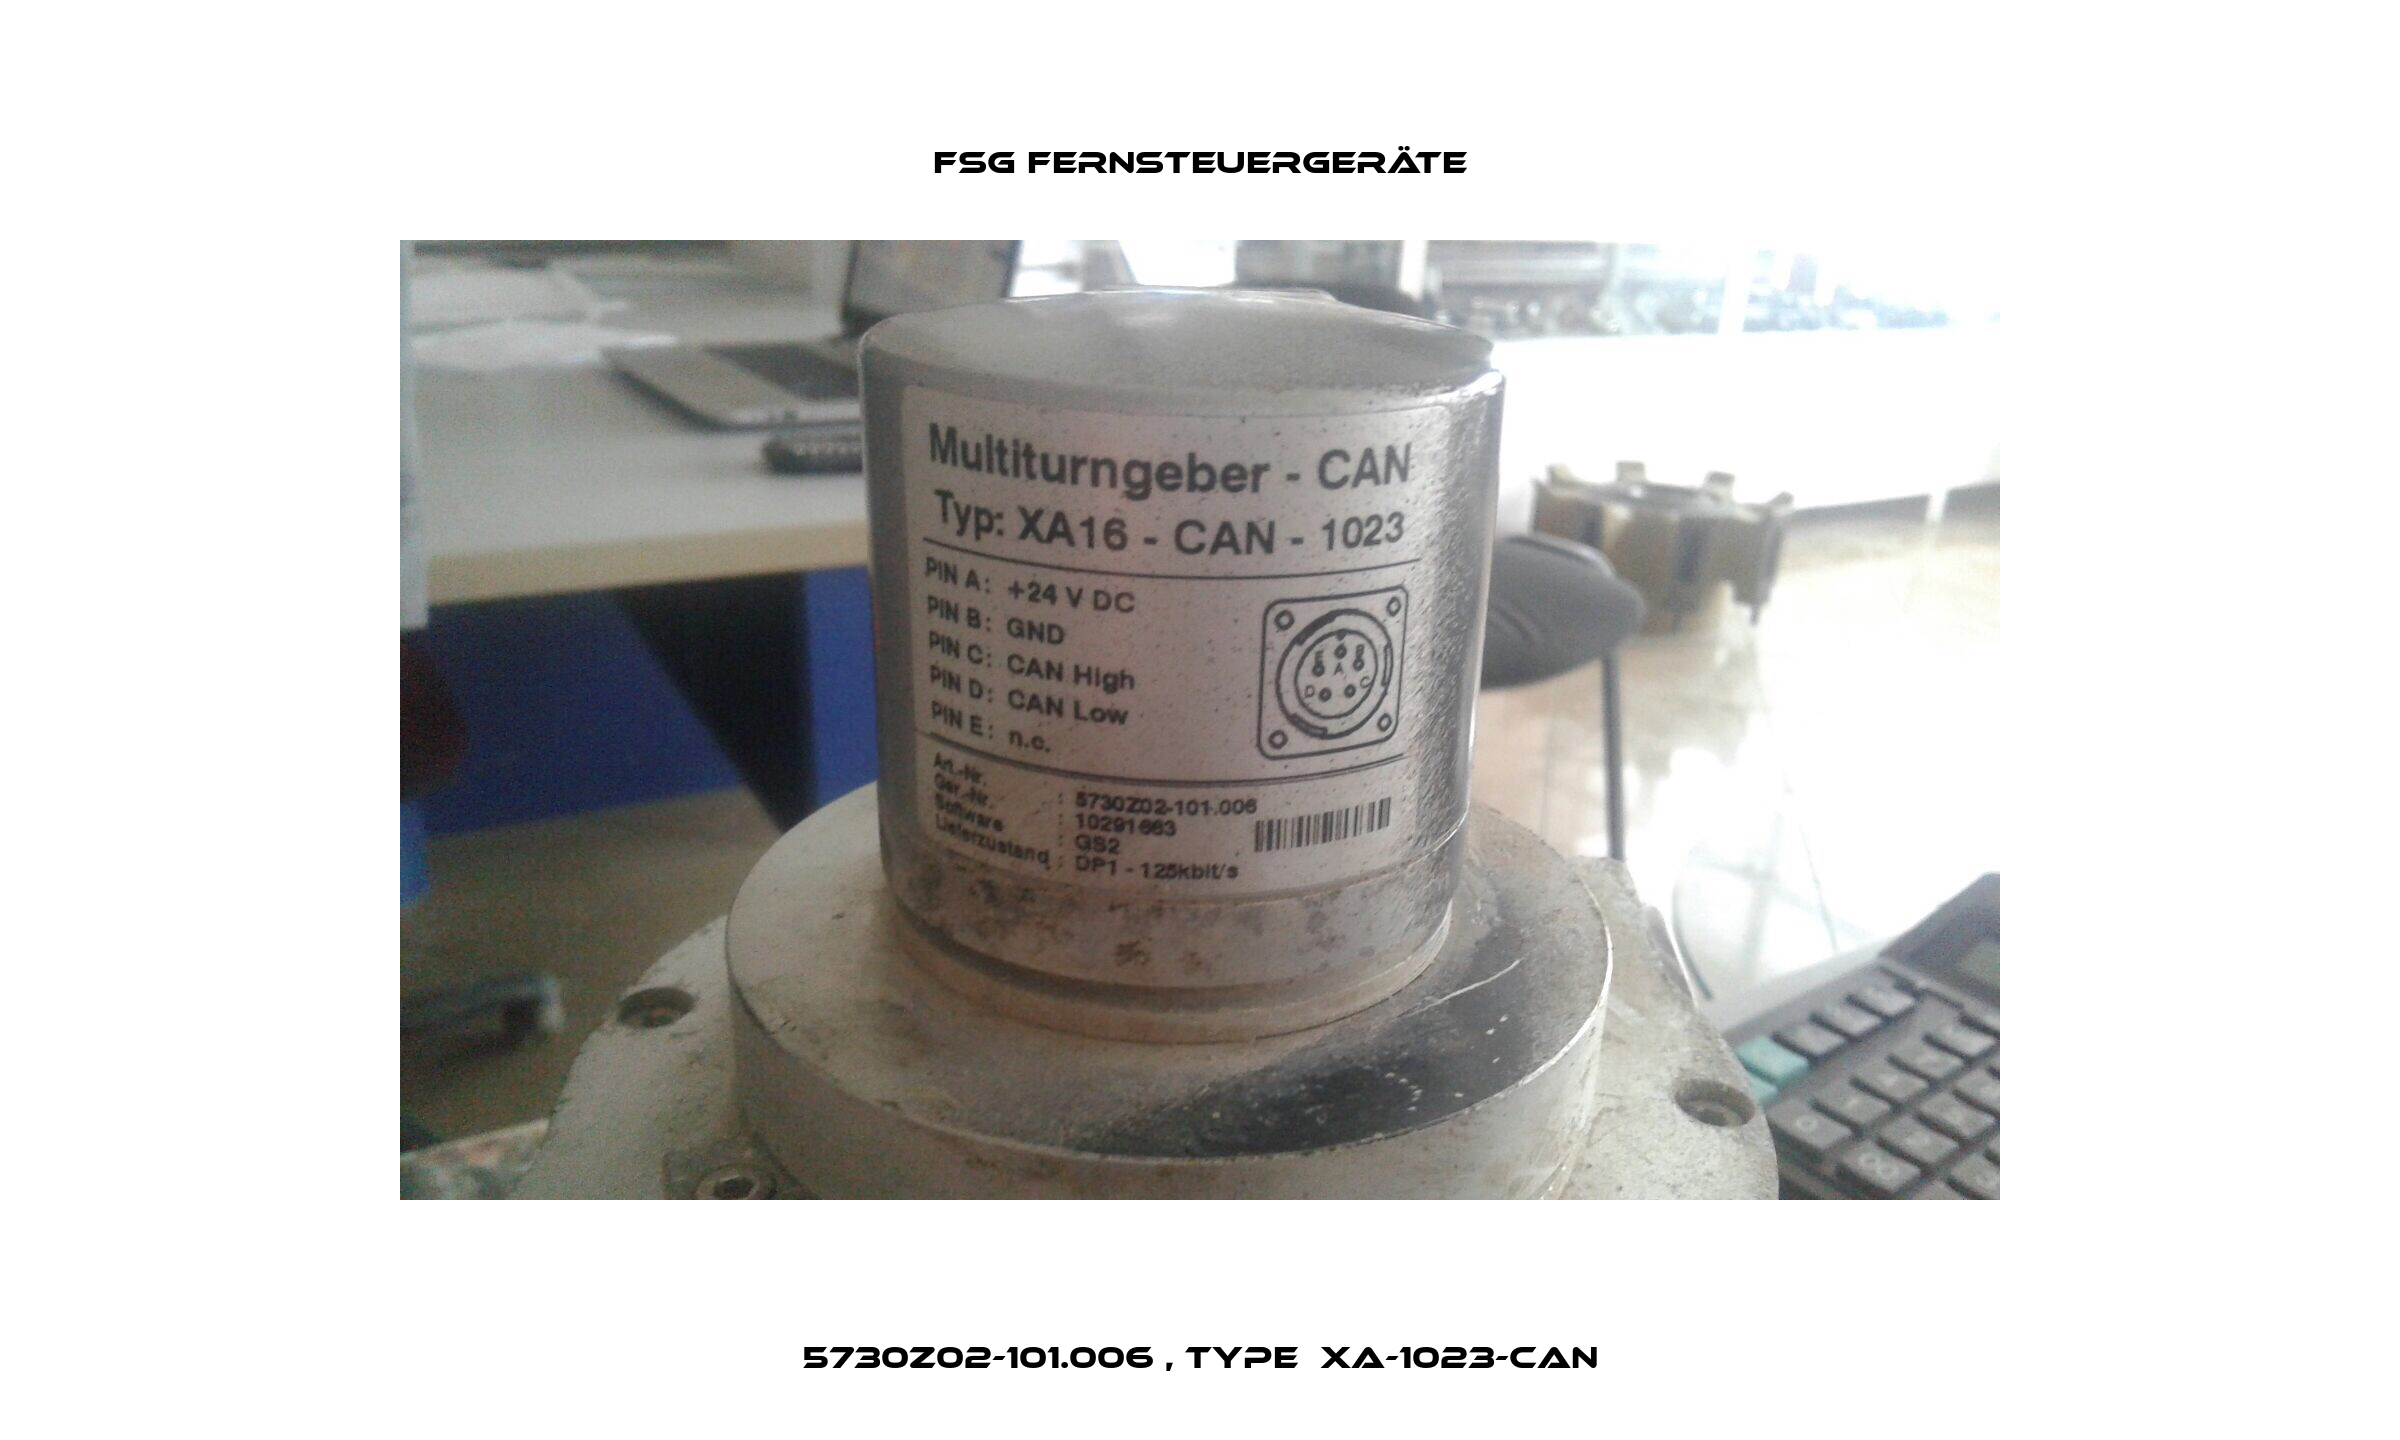 5730Z02-101.006 , type  XA-1023-CAN FSG Fernsteuergeräte